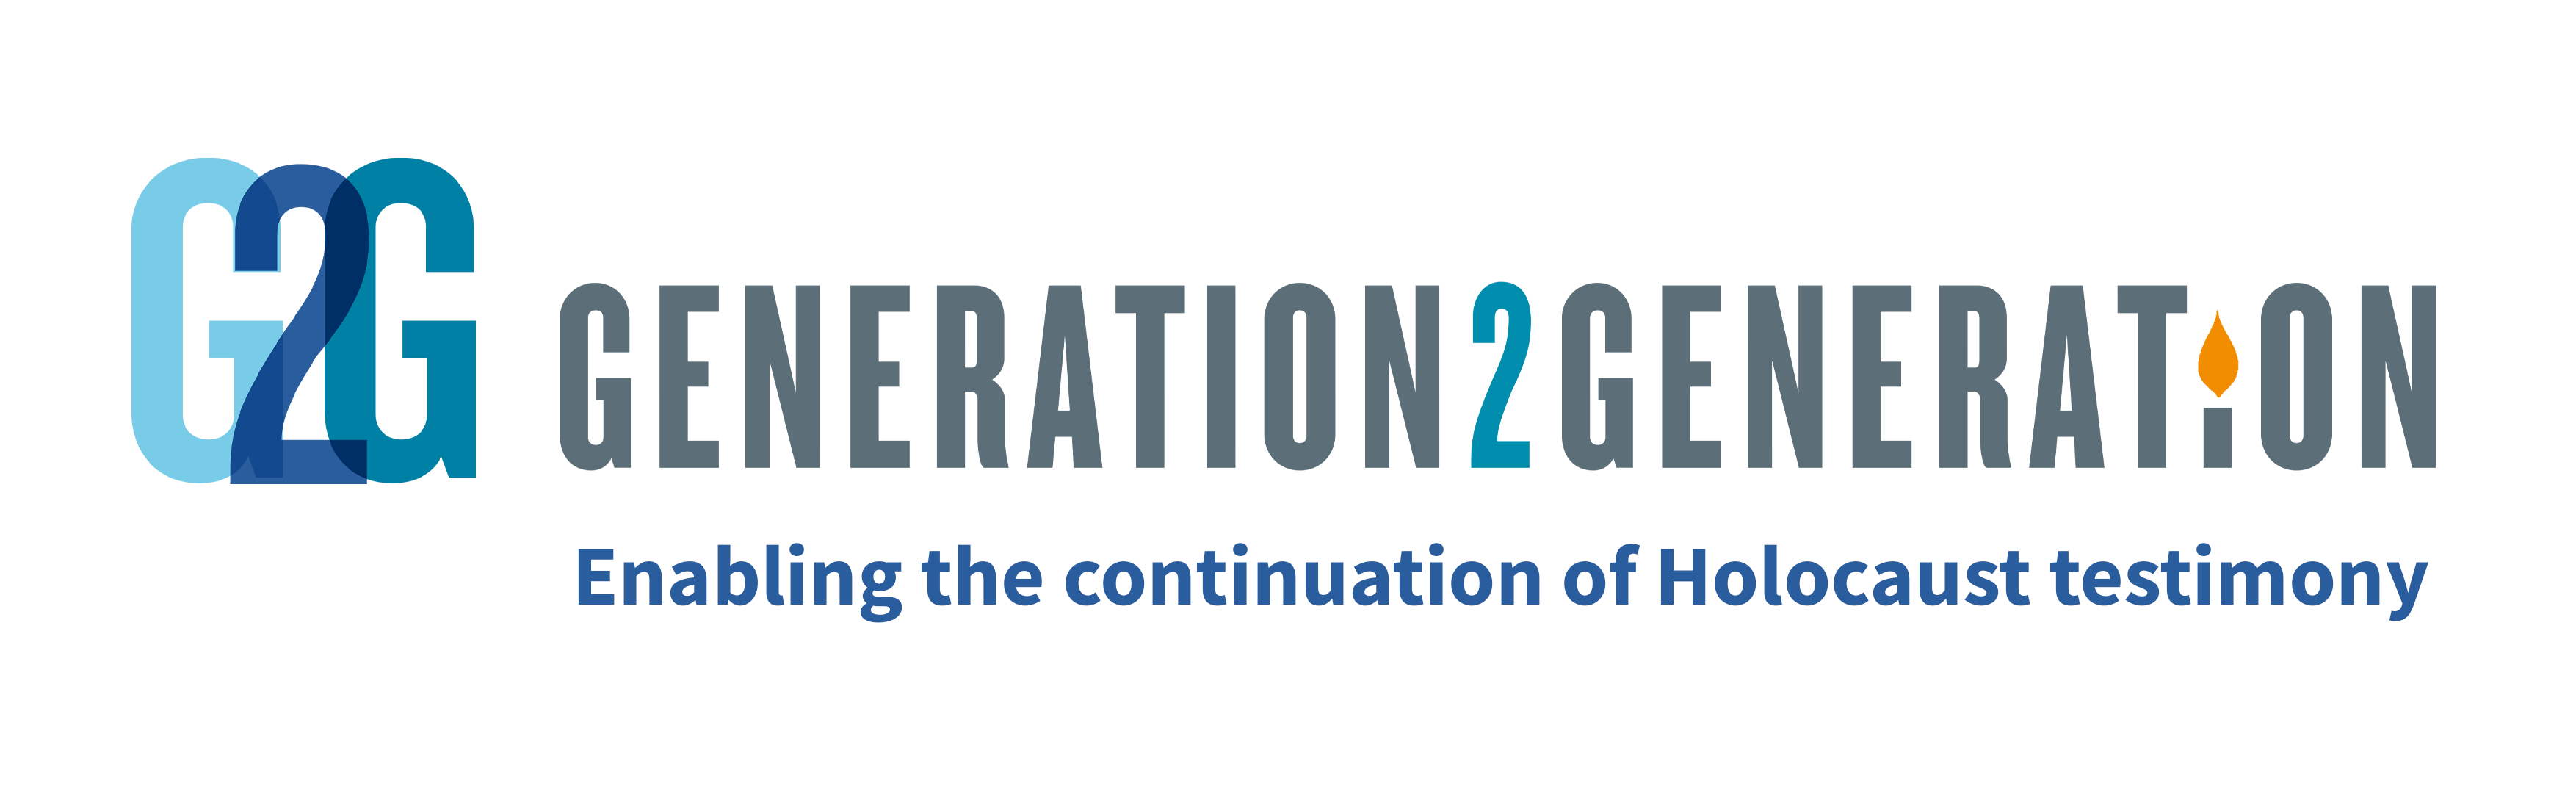 Generation2Generation charity logo